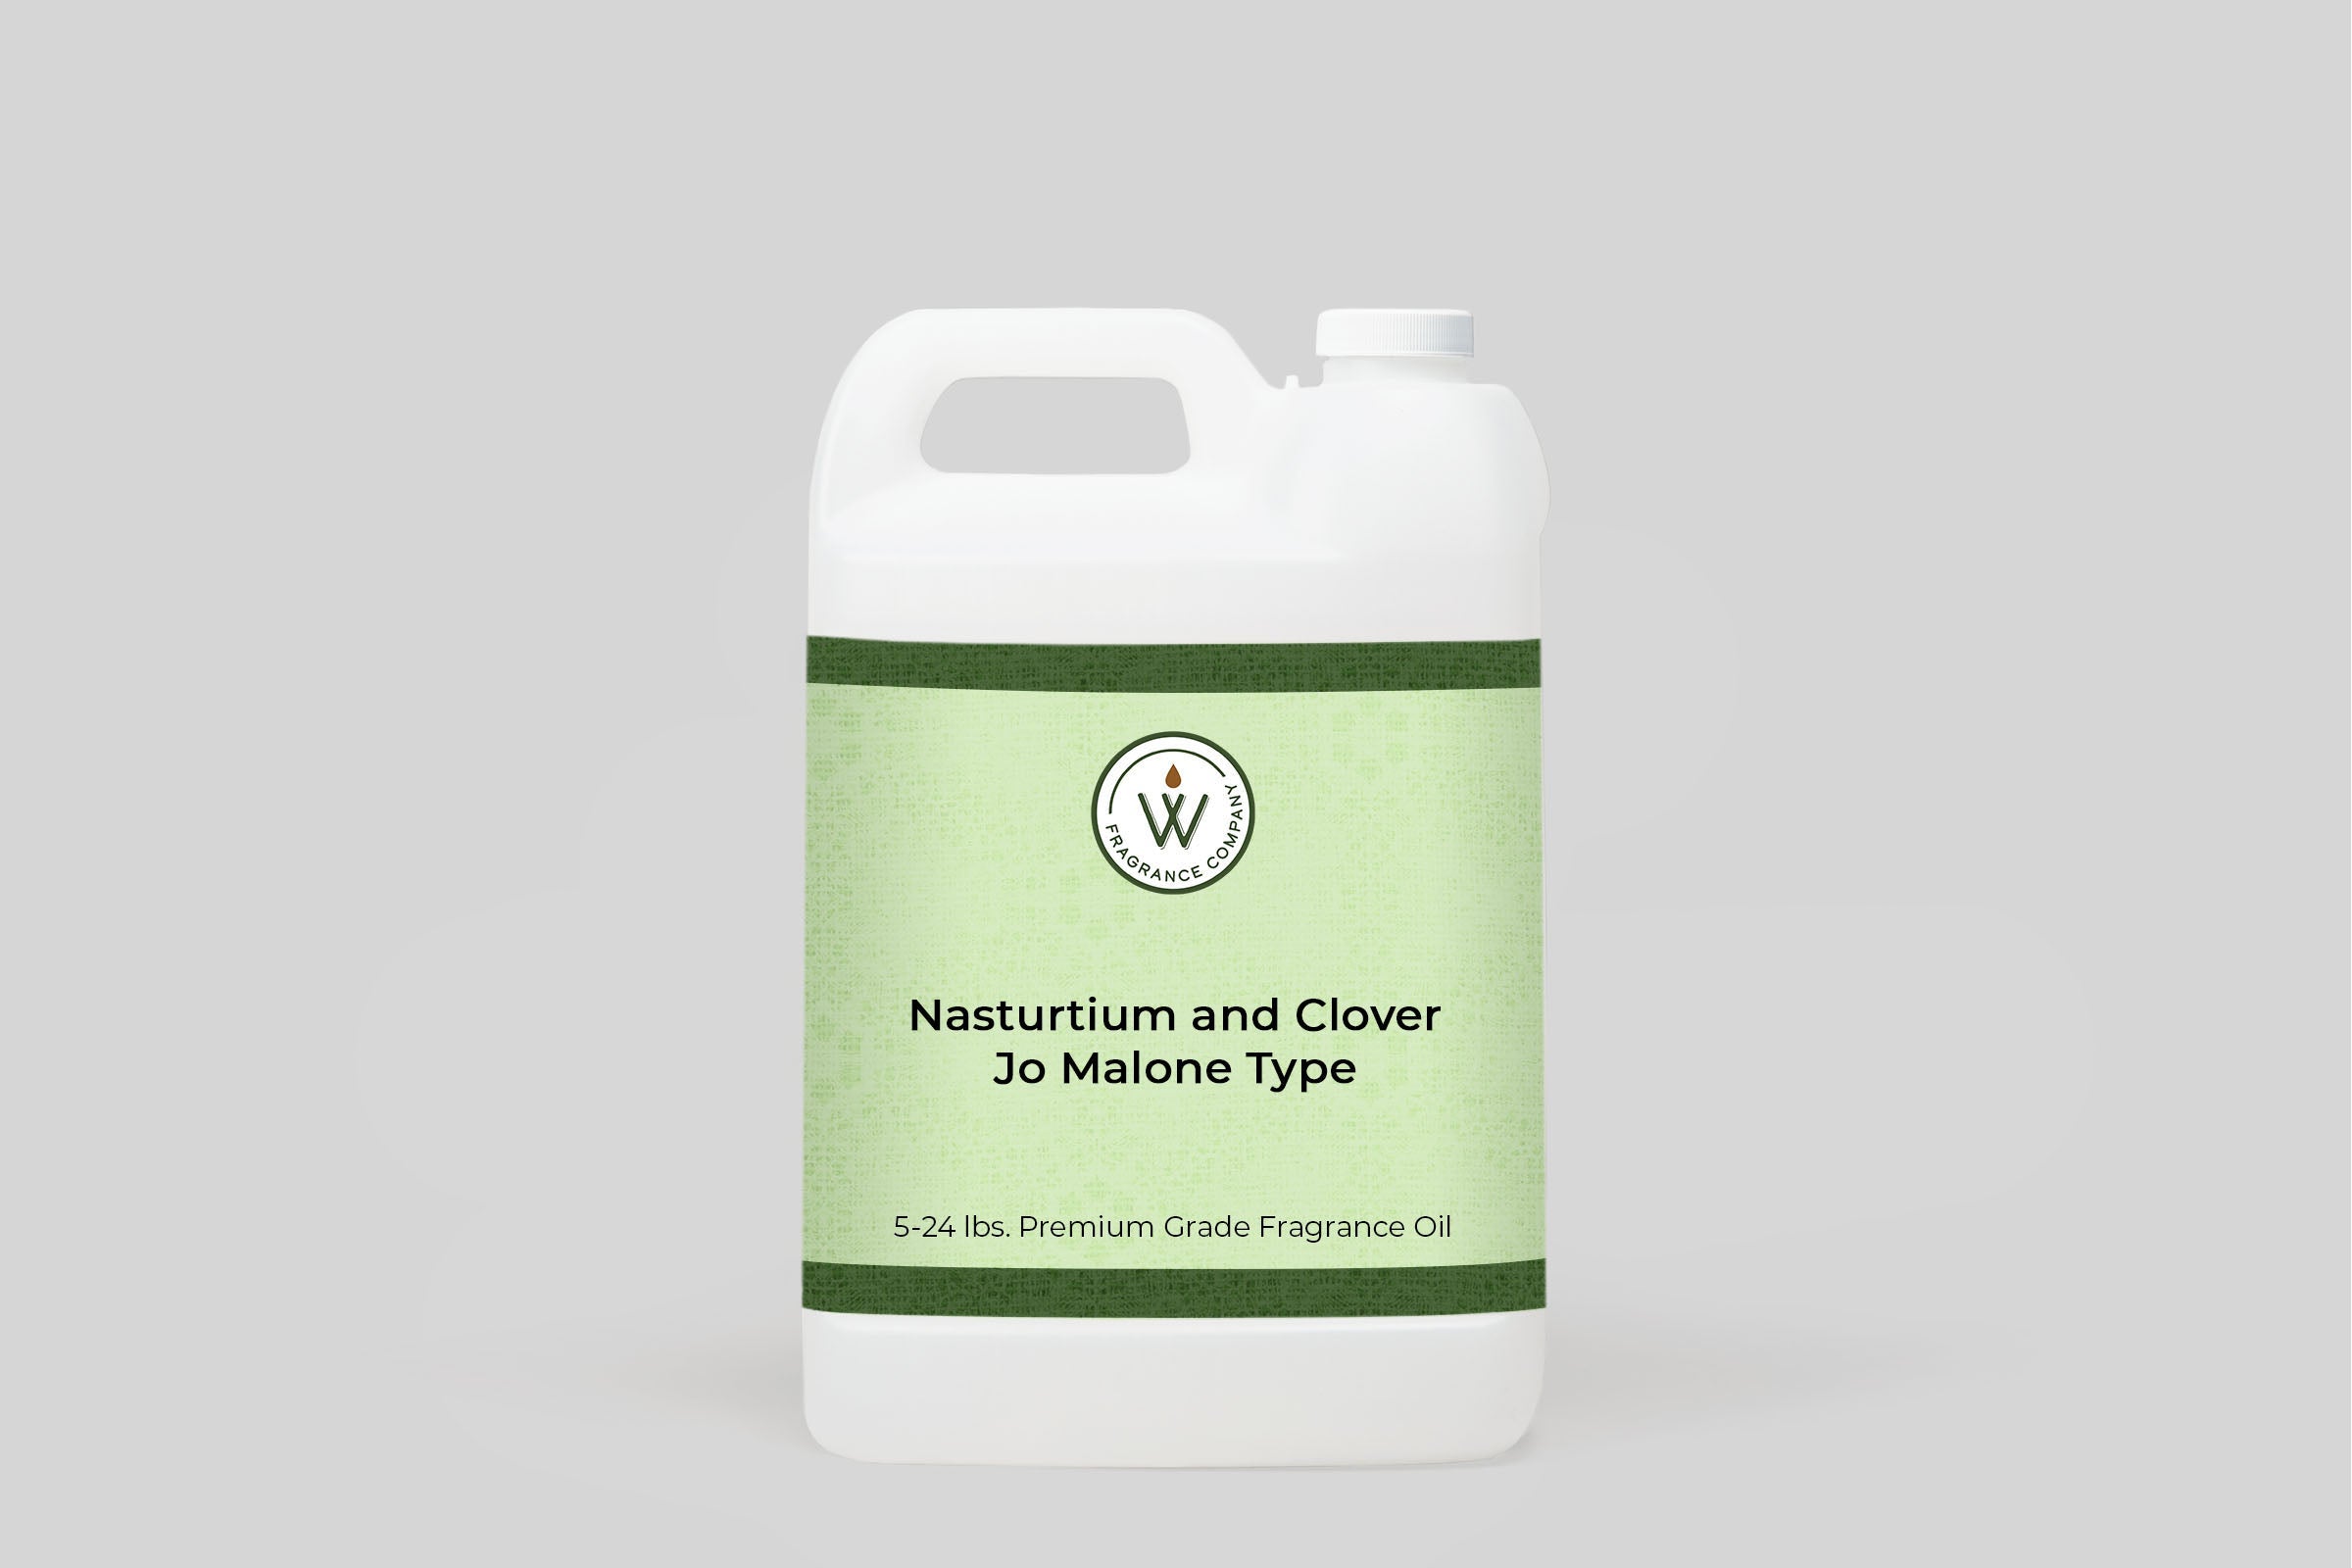 Nasturtium and Clover Jo Malone Type Fragrance Oil